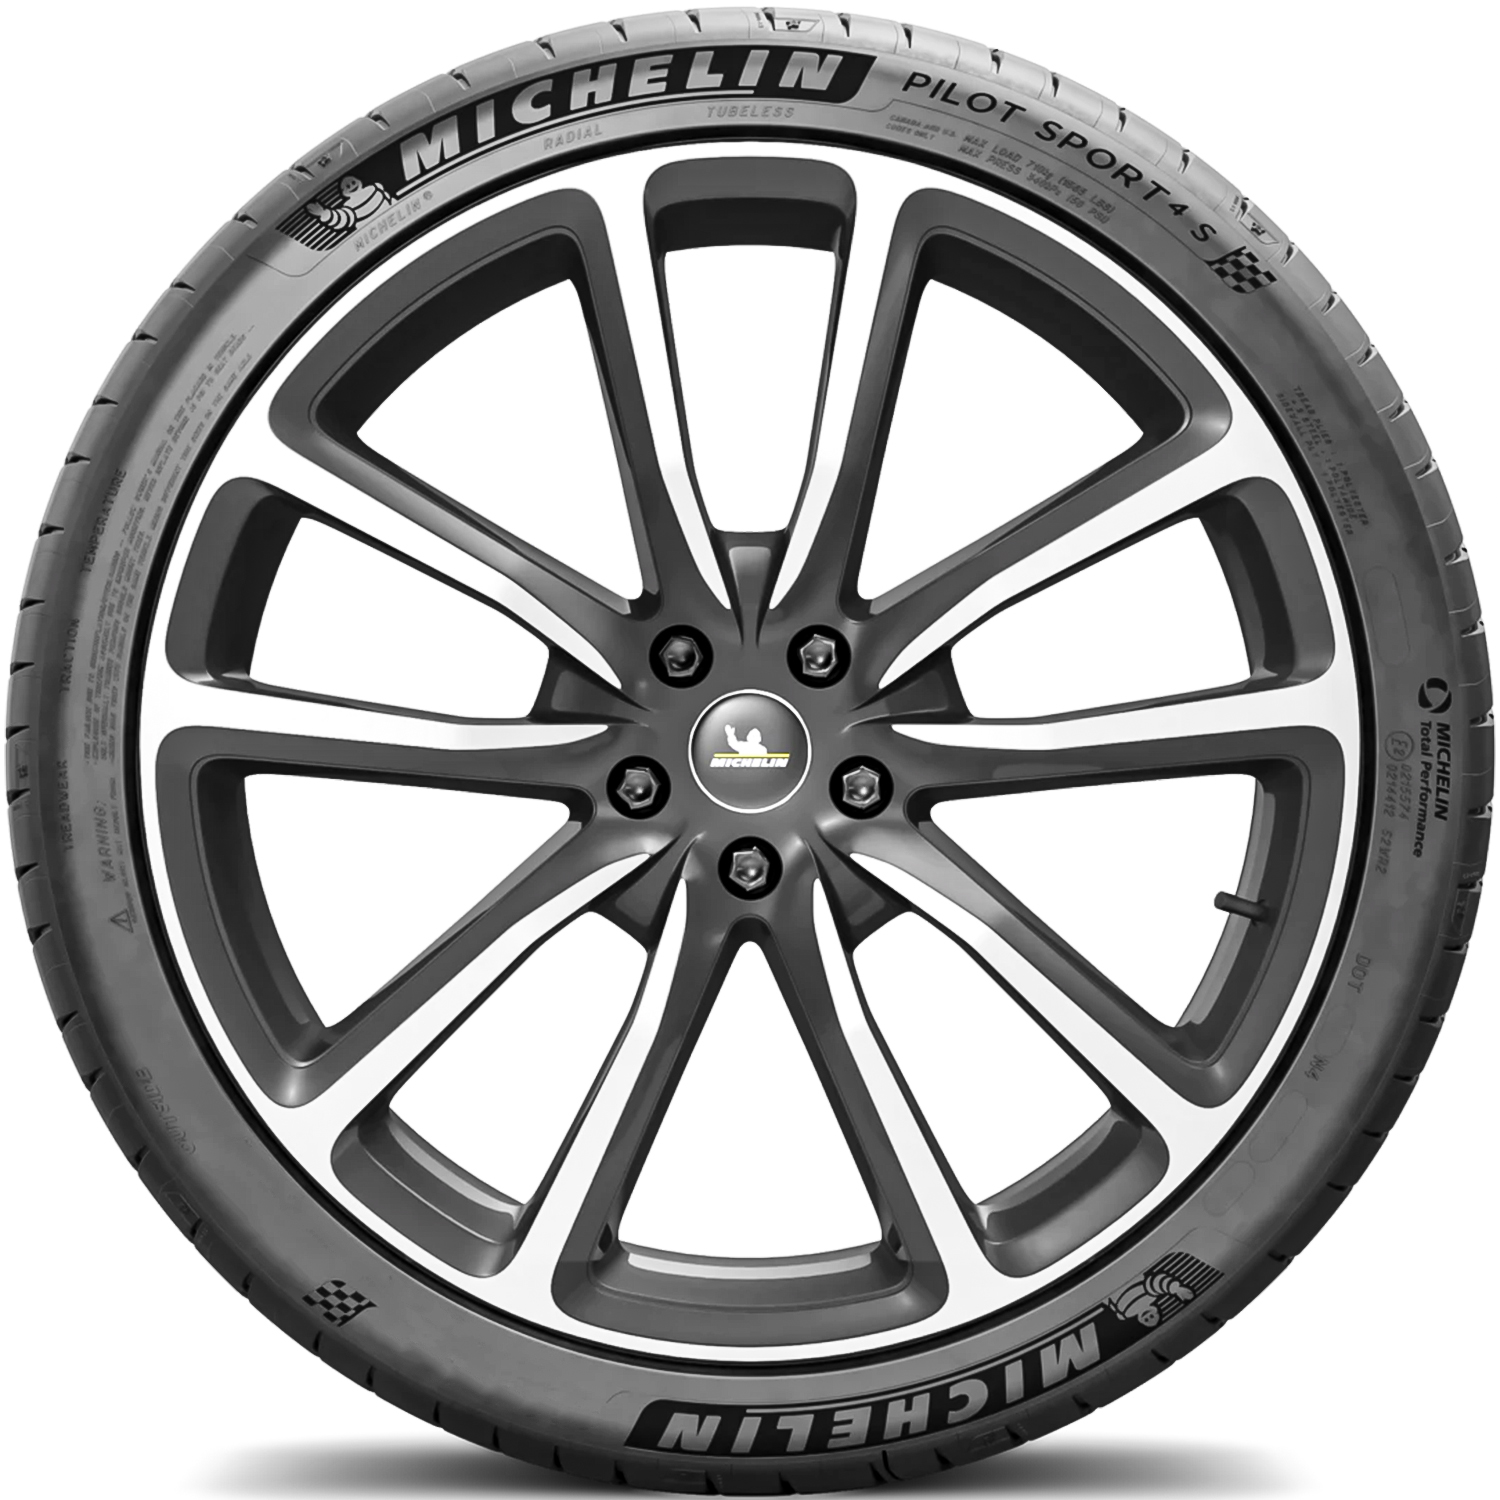 Michelin Pilot Sport 4S Performance 215/45ZR17 (91Y) XL Passenger Tire - image 4 of 8